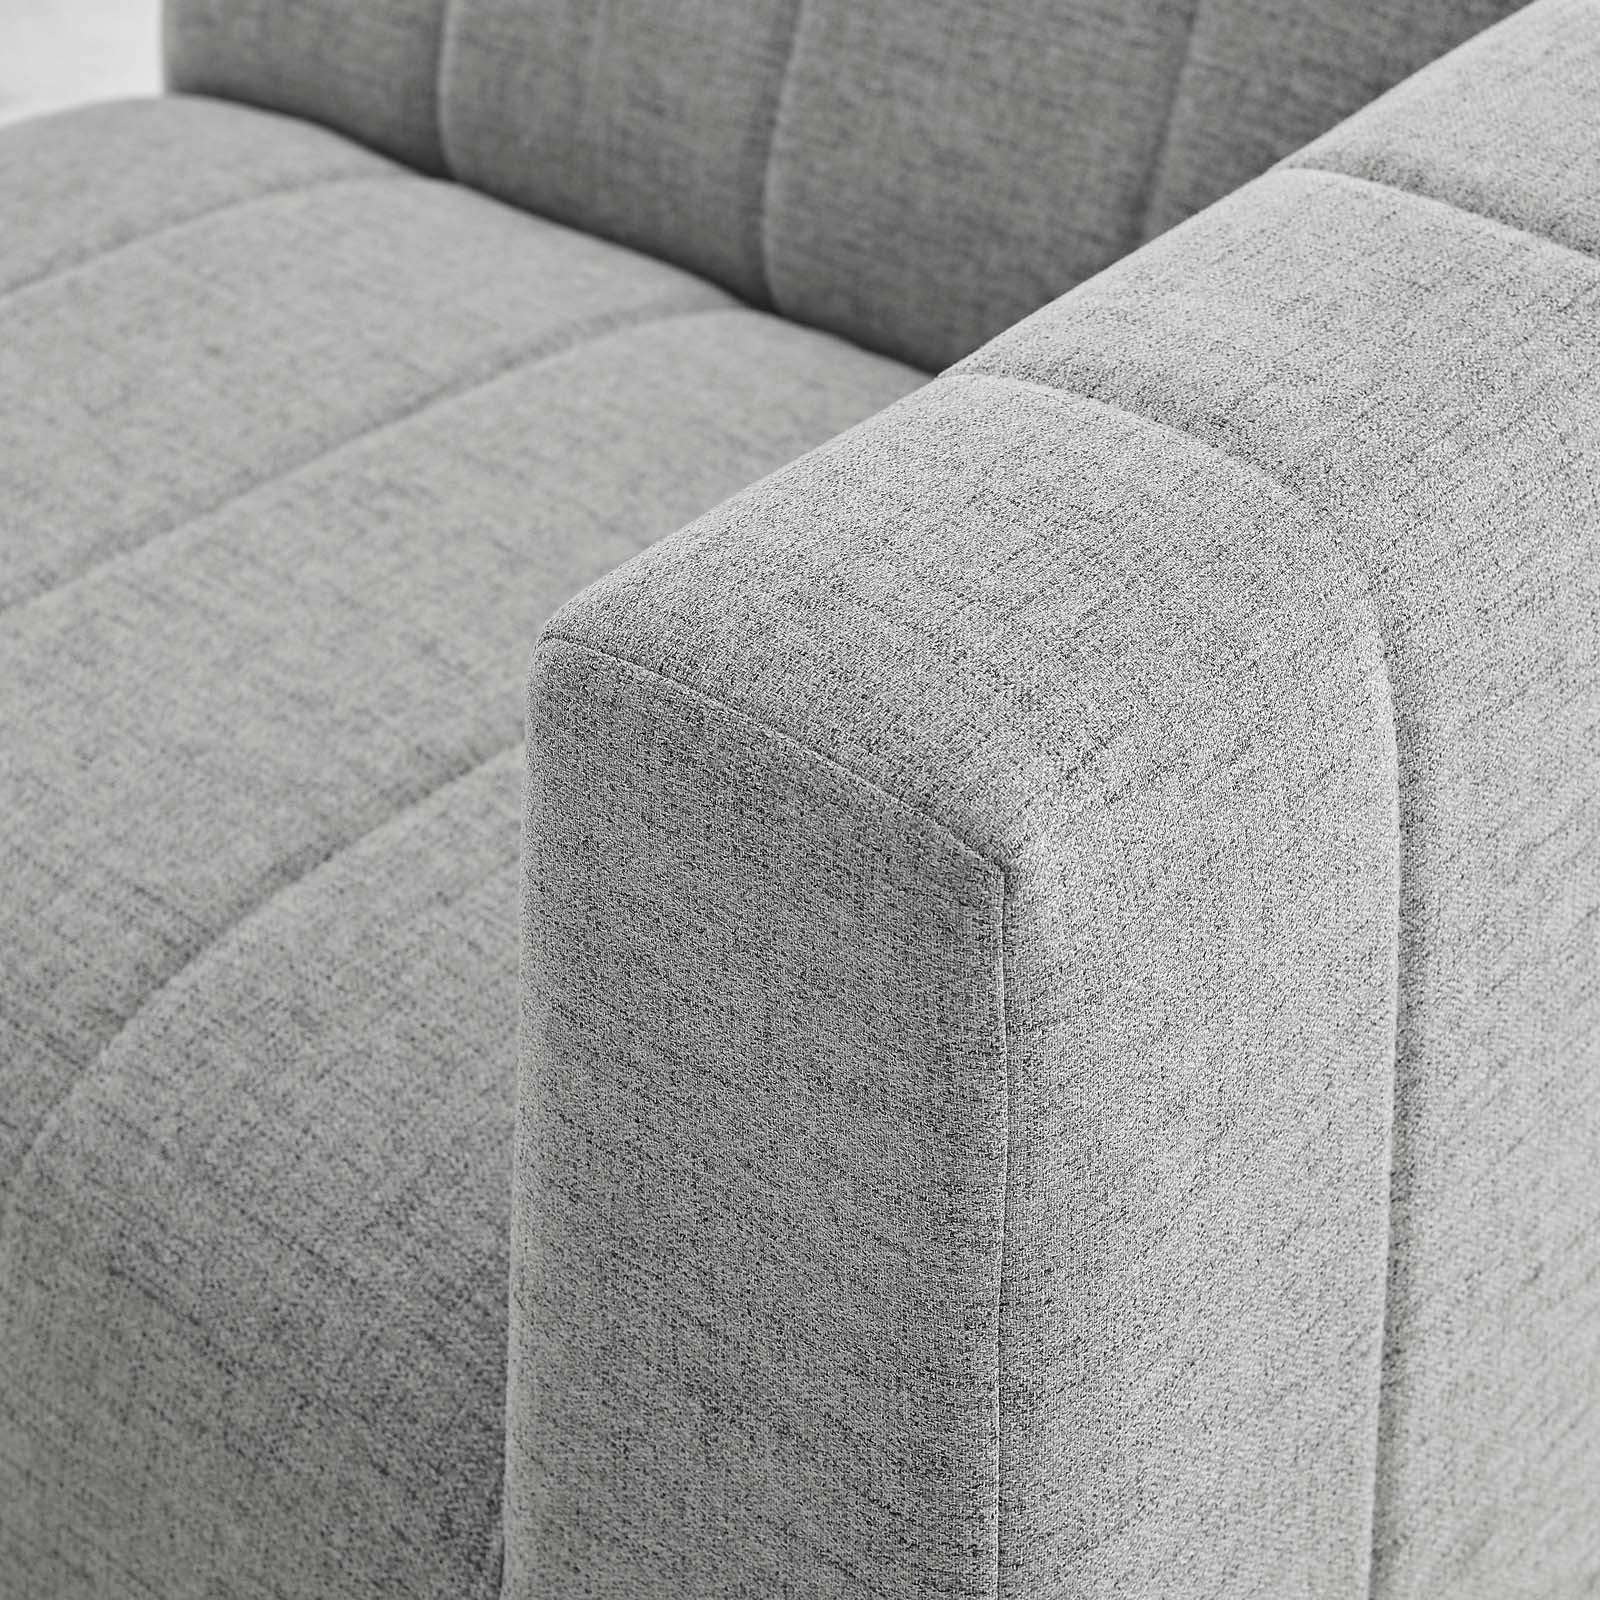 Bartlett Upholstered Fabric Upholstered Fabric 3-Piece Sofa - East Shore Modern Home Furnishings